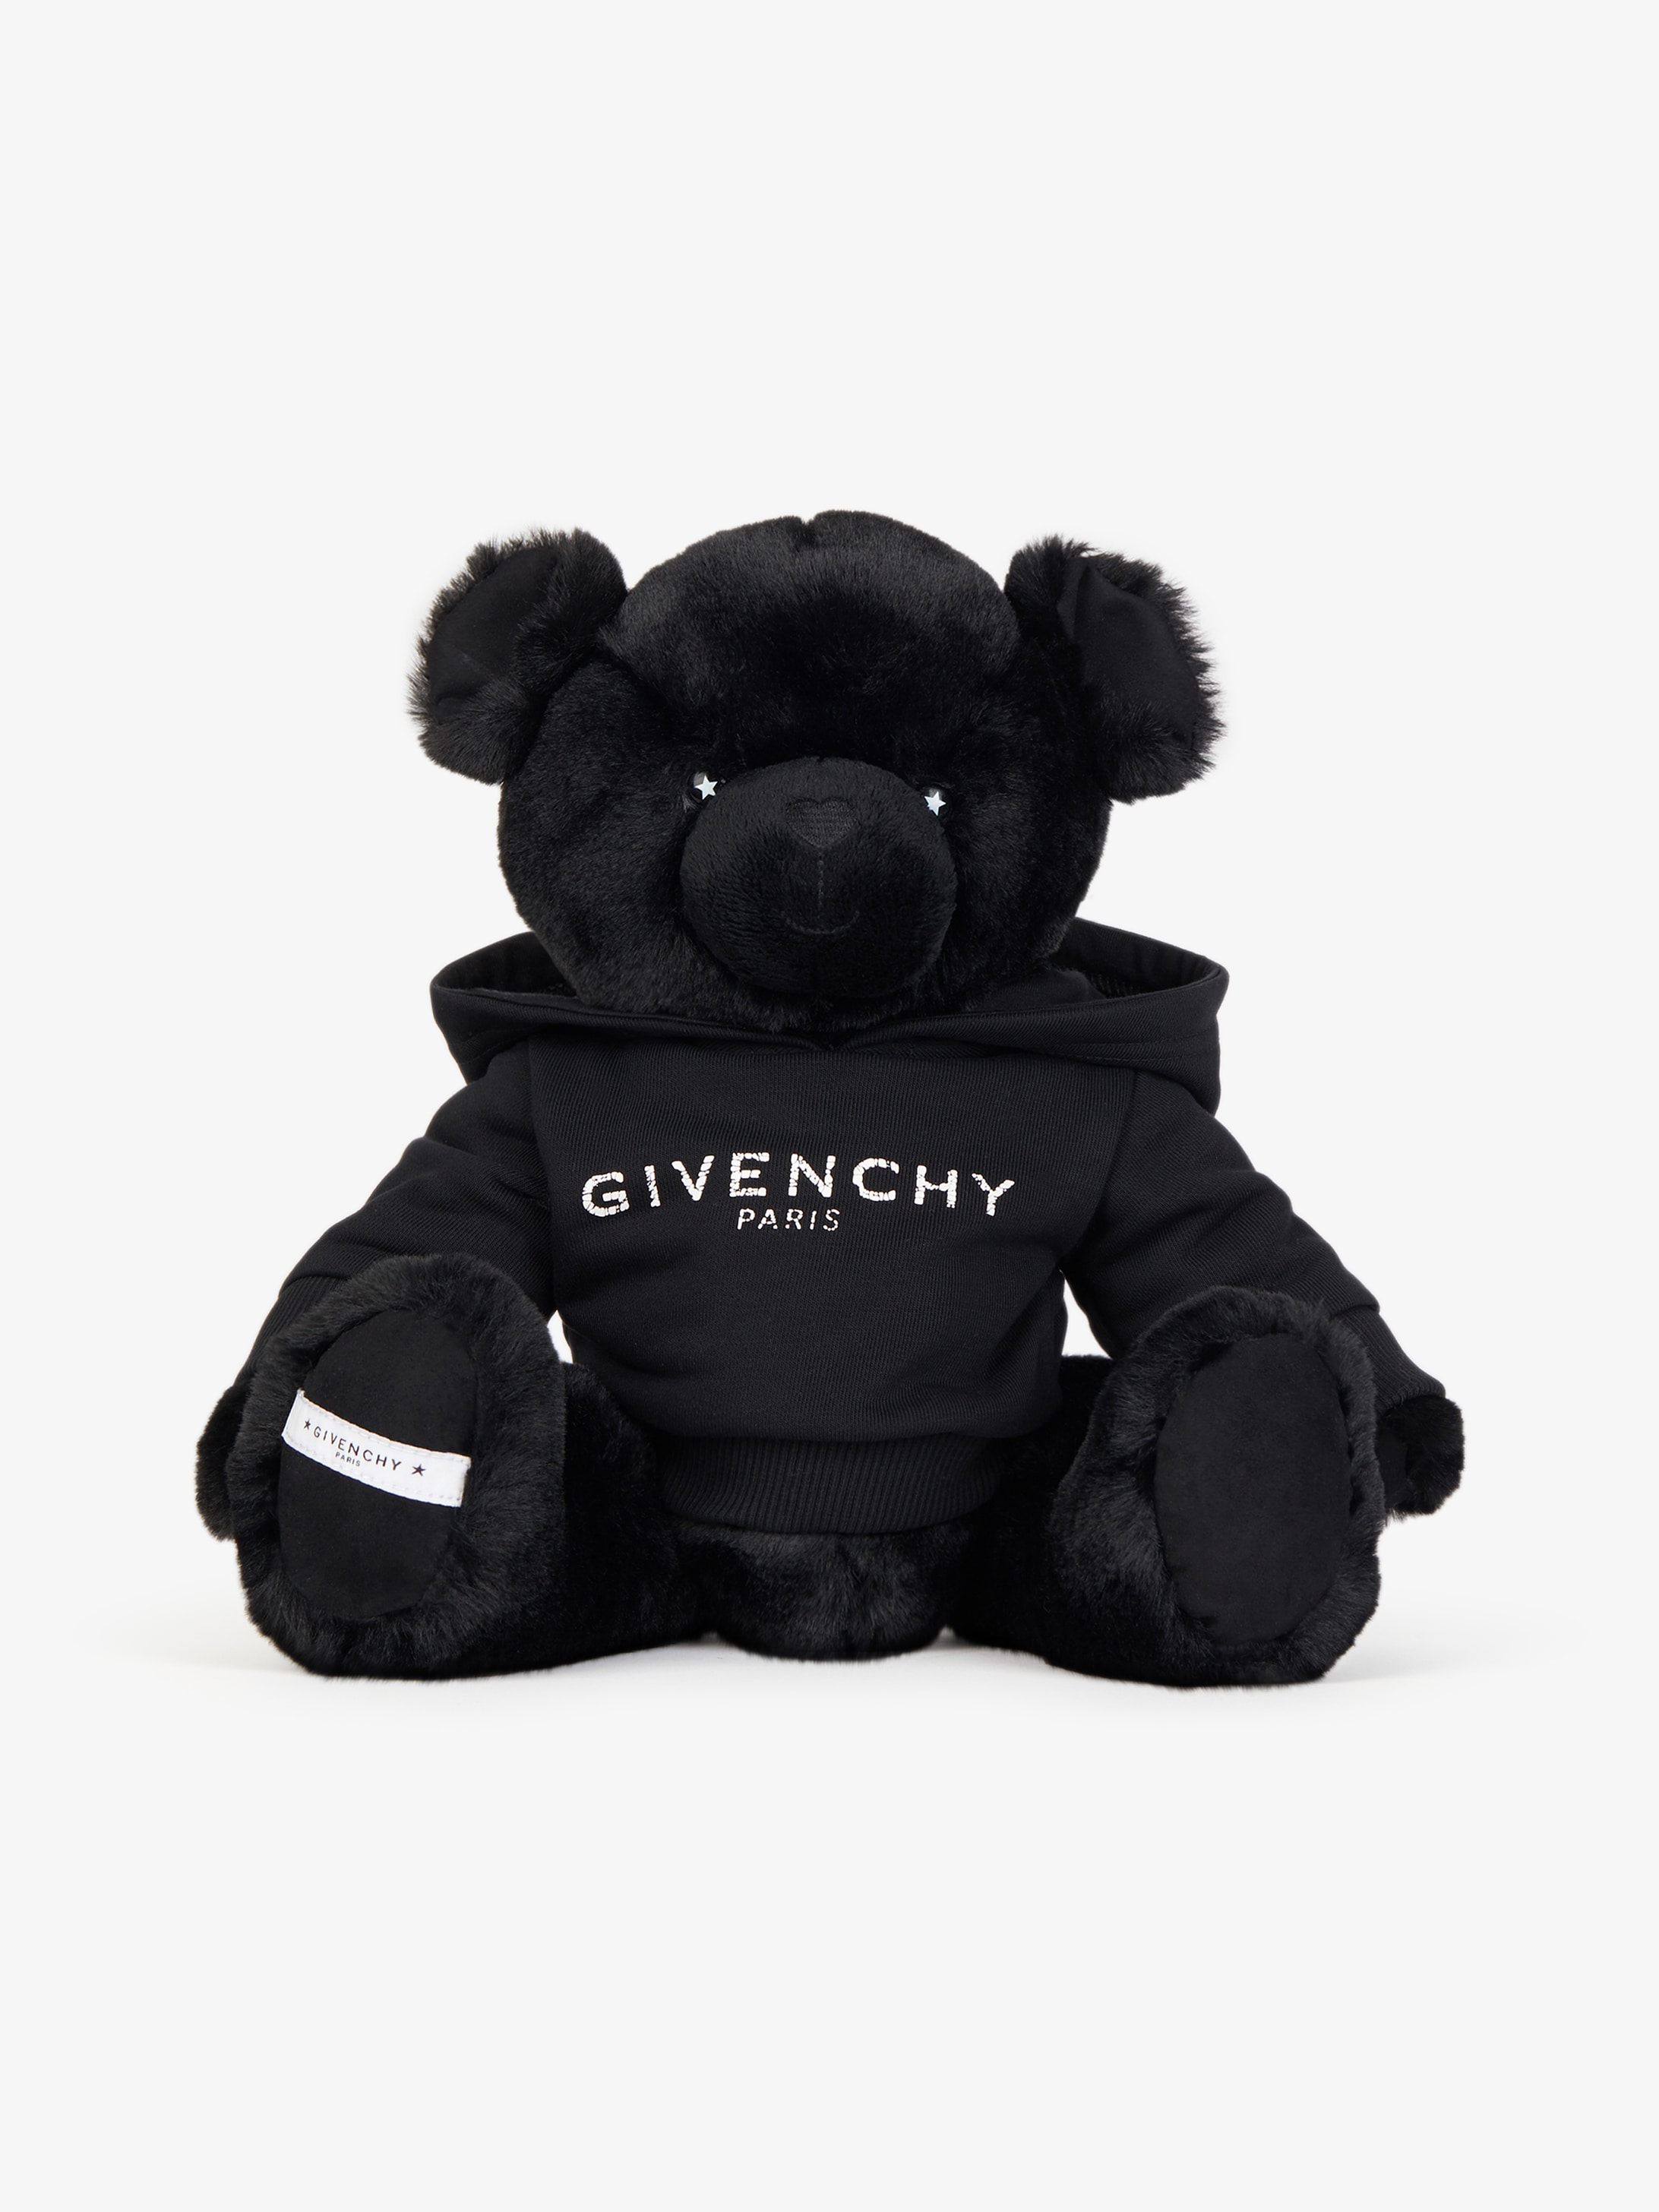 GIVENCHY PARIS Teddy bear | GIVENCHY Paris